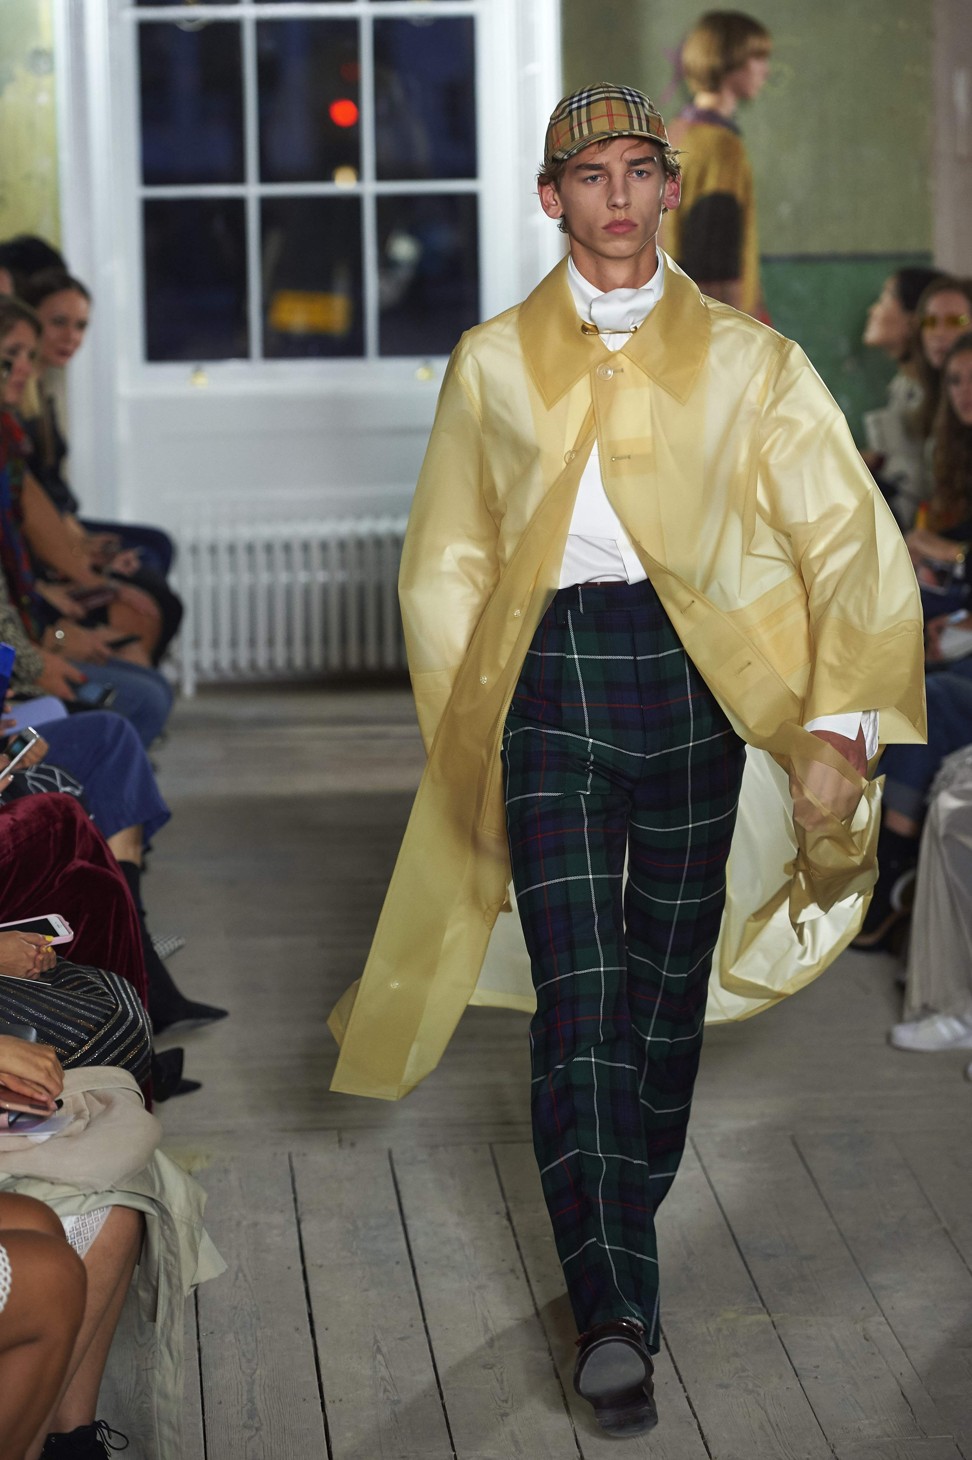 90's Fashion Takes Over London Fashion Week | Fashion News ...